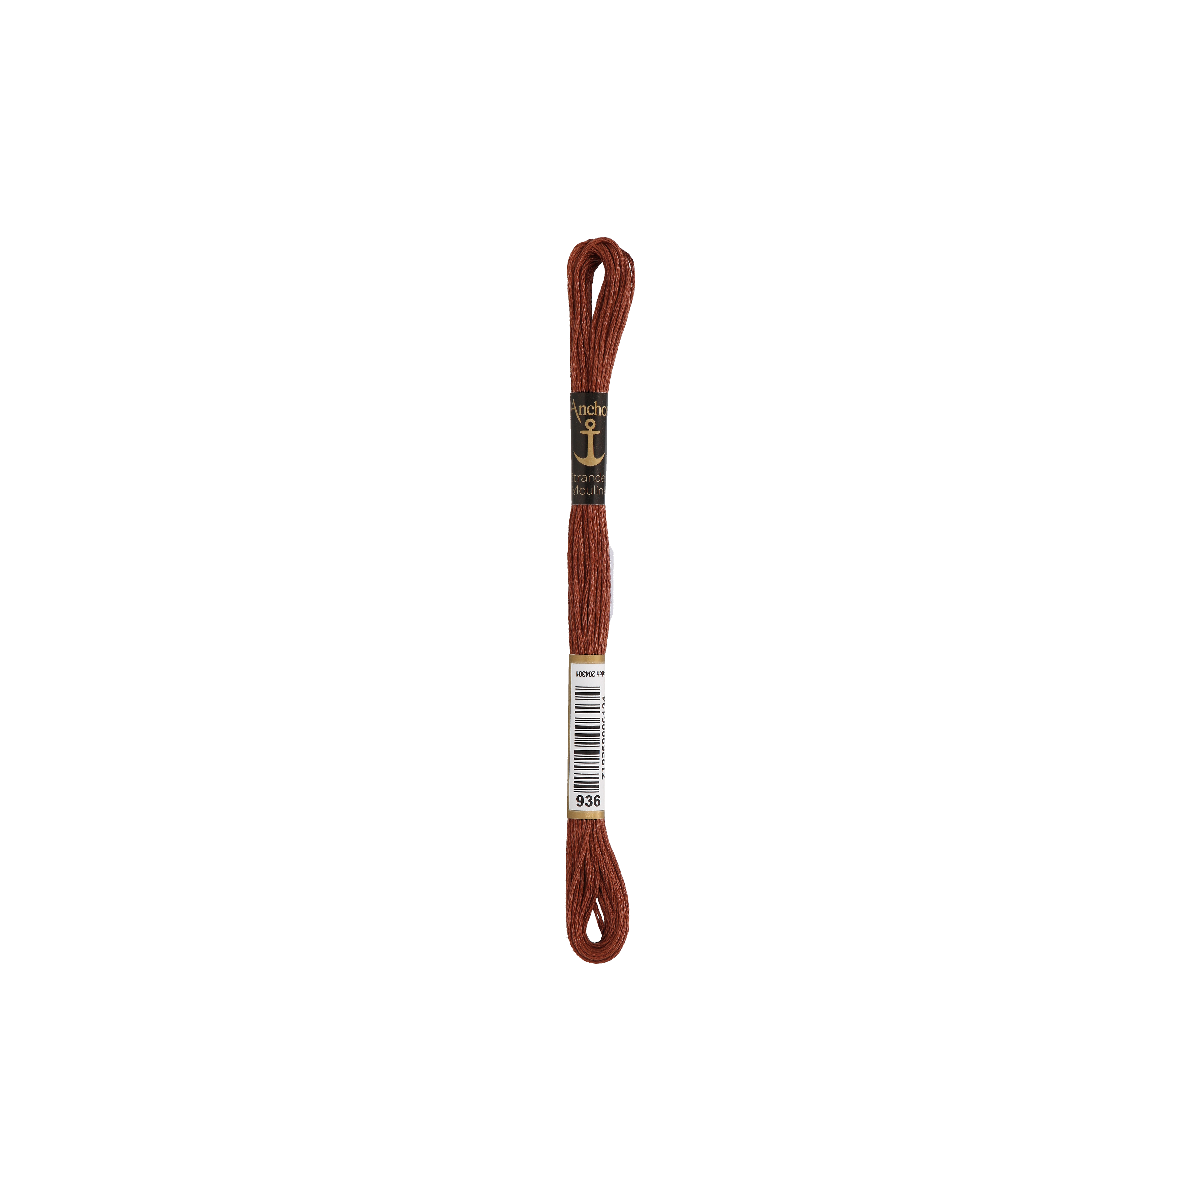 Anchor Sticktwist 8m, chocolade, katoen, kleur 936, 6-draads